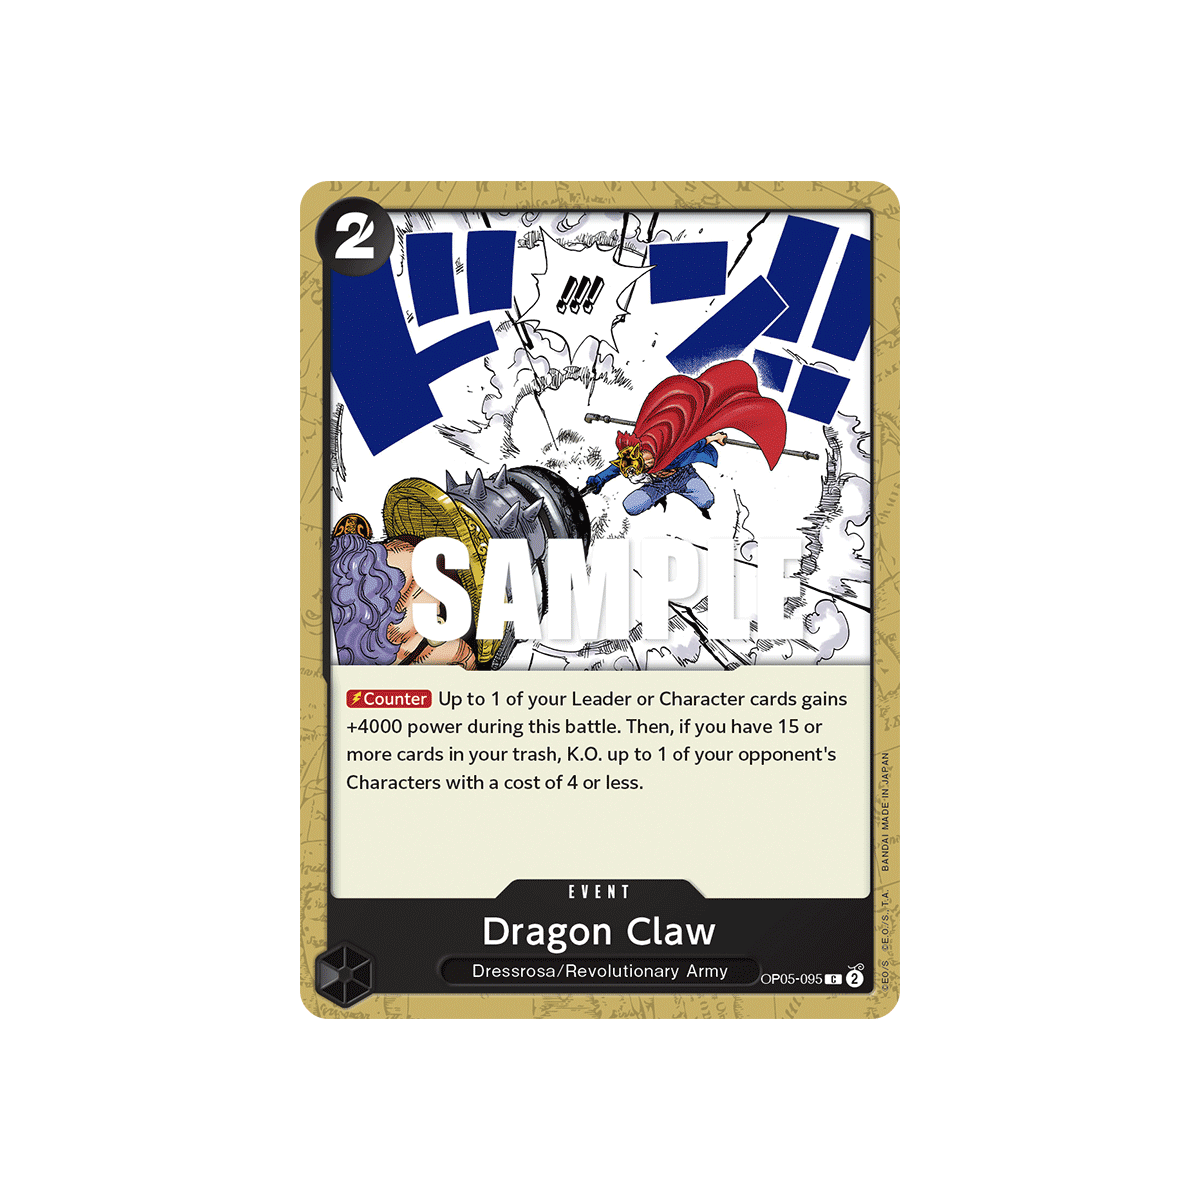 Dragon Claw, carte EVENT de l'extension AWAKENING OF THE NEW ERA [OP05]